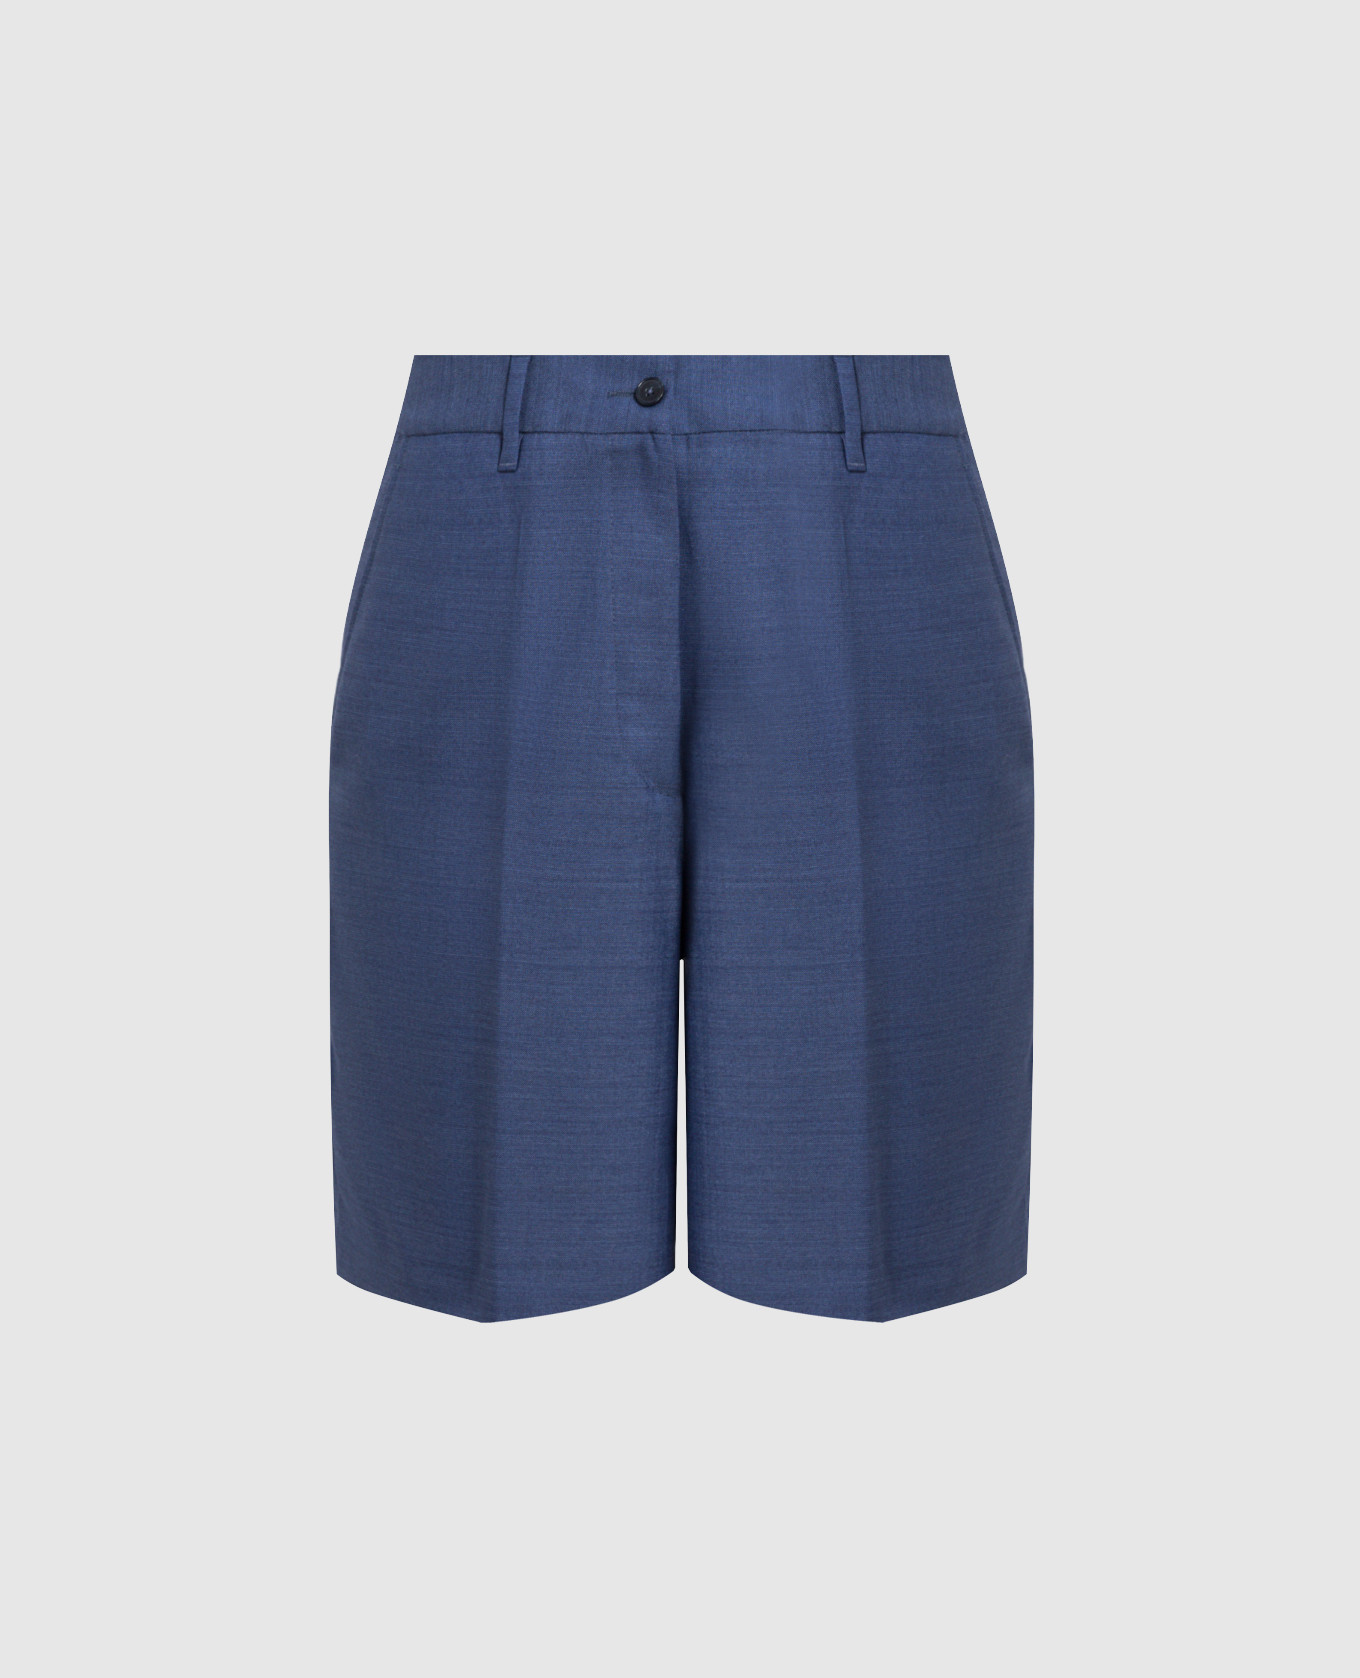 Blue wool shorts